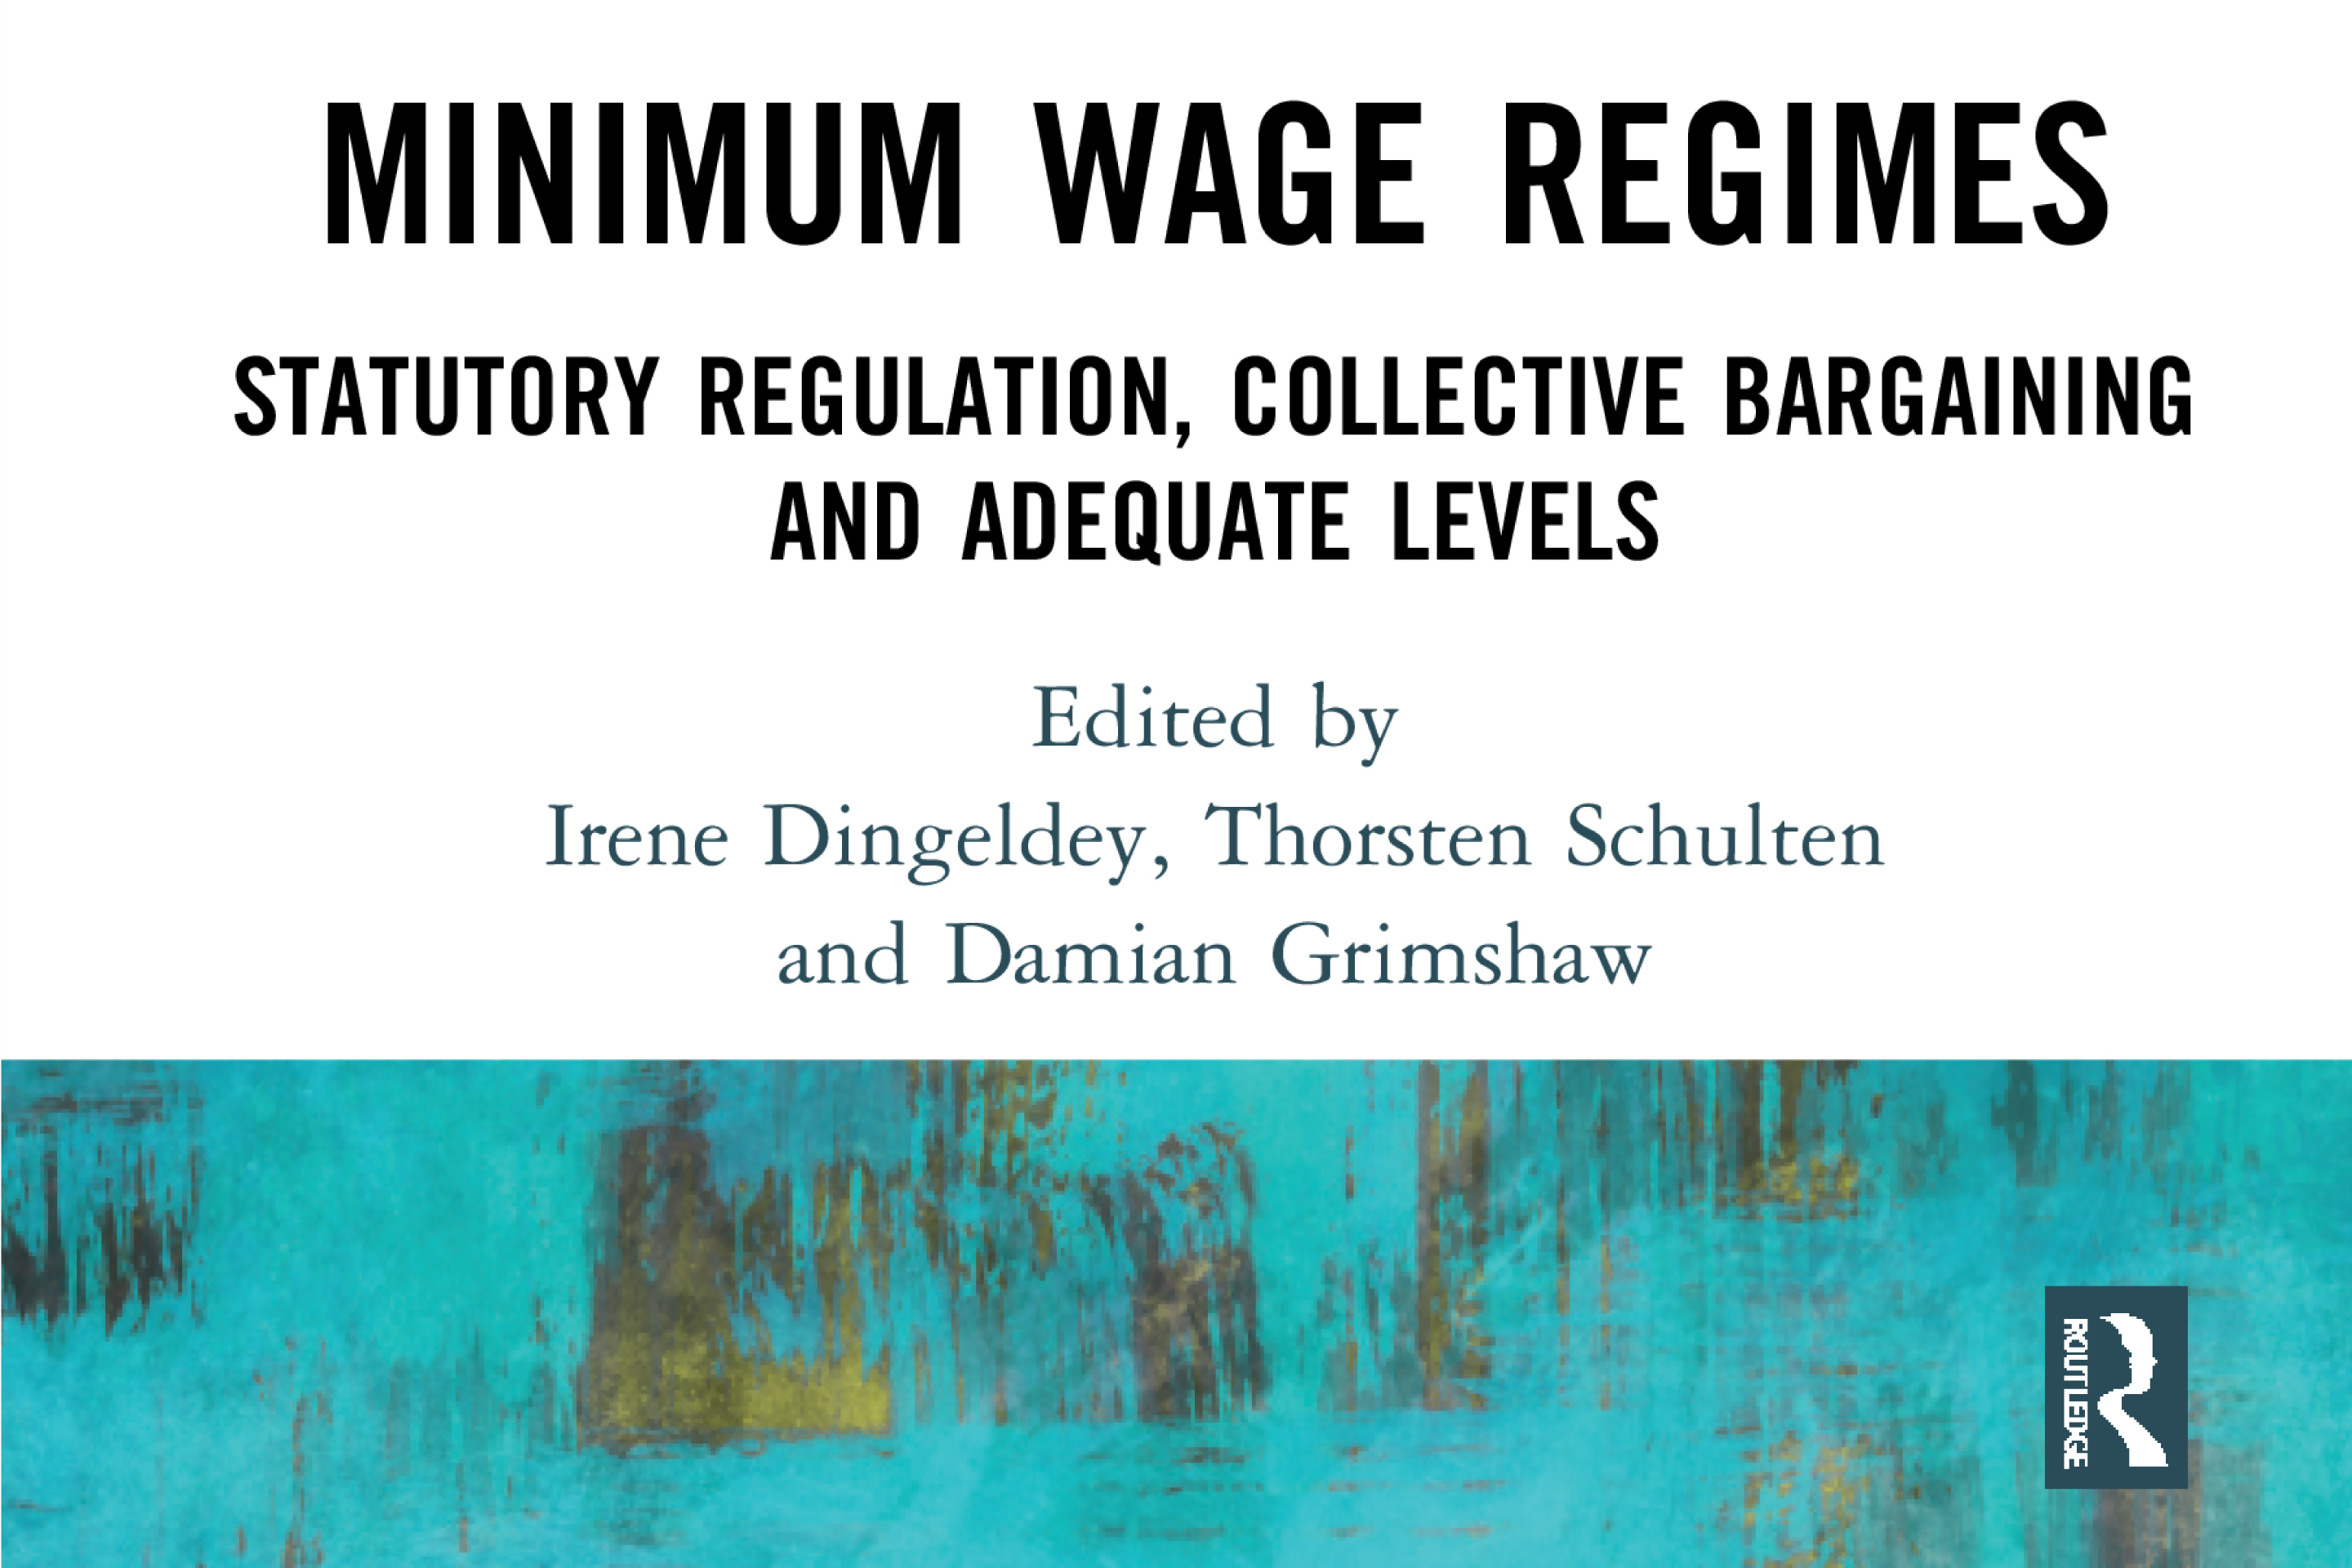 Minimum wage regimes